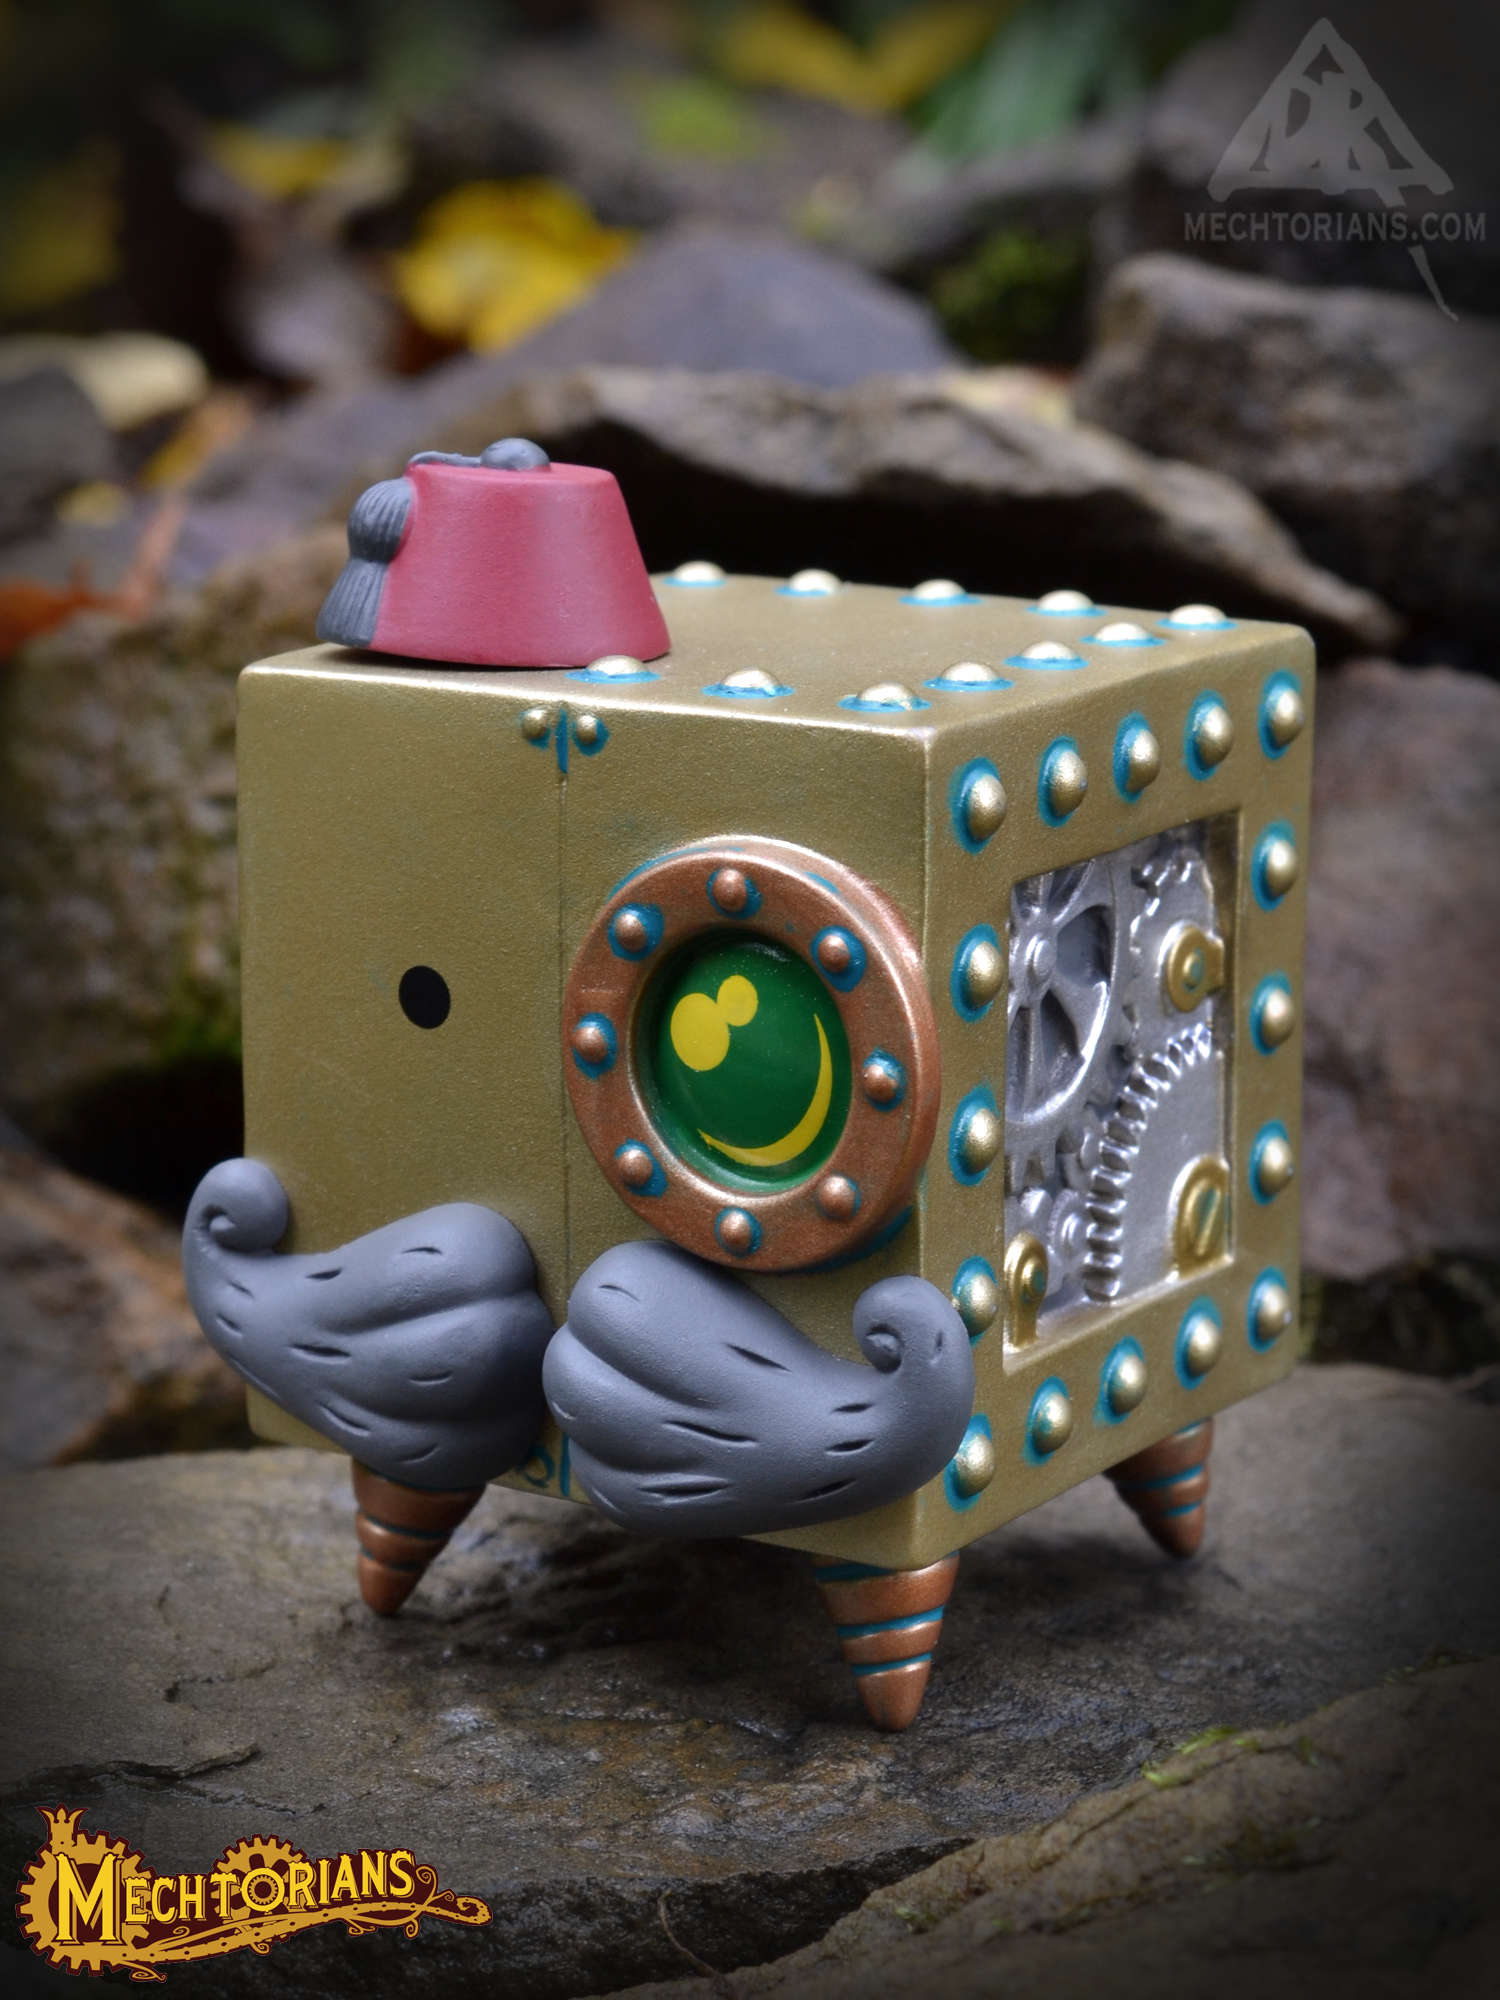 Doktor A's Mini Mechtorians vinyl figure Series 2 with Kidrobot. Colonel Rombus